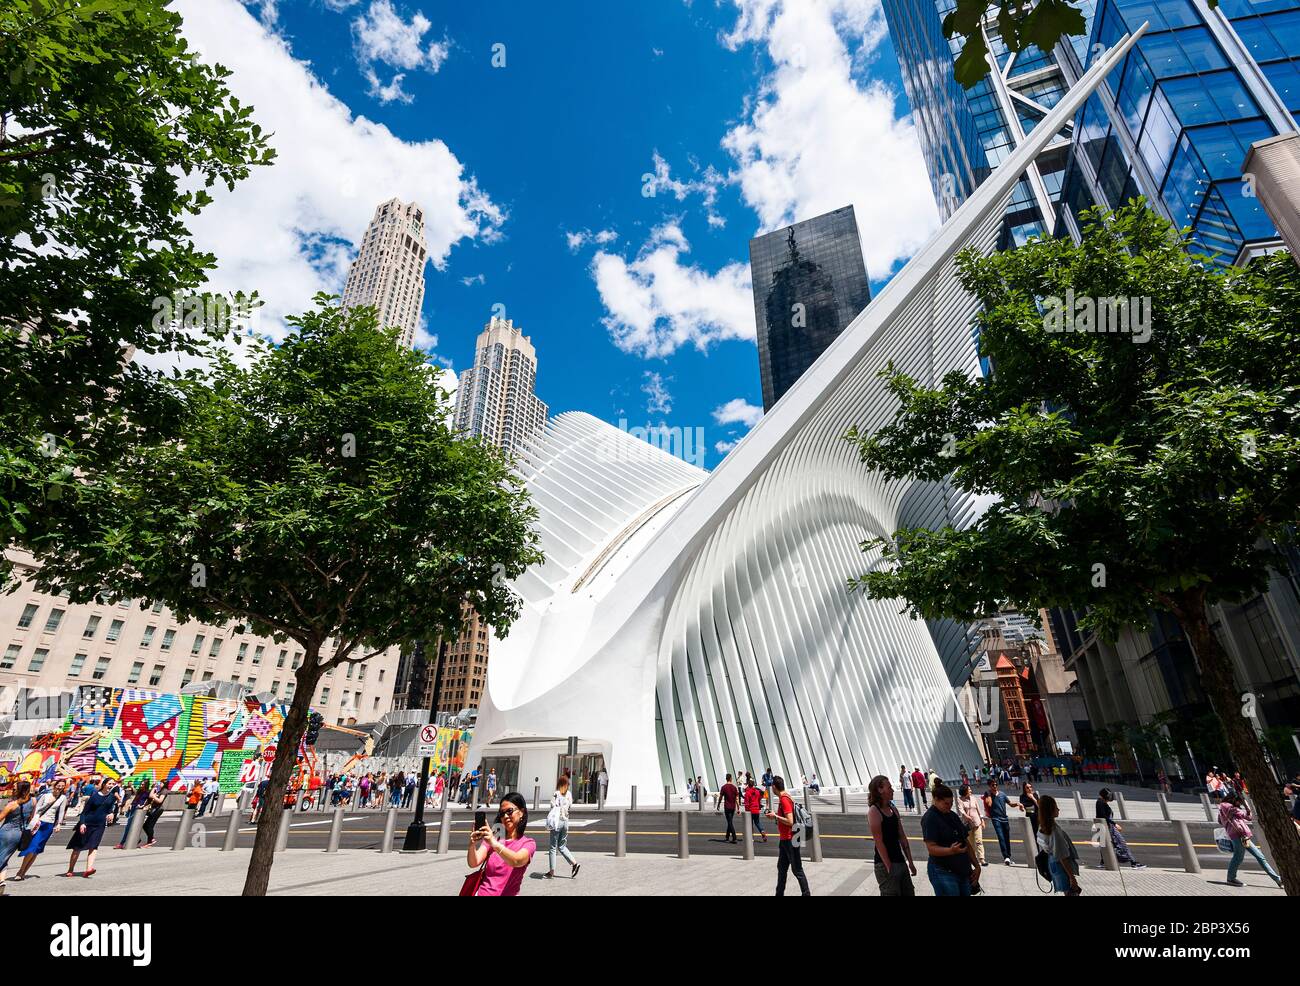 The Oculus Santiago Calatrava Architecture Oculus New York City Stock Photo